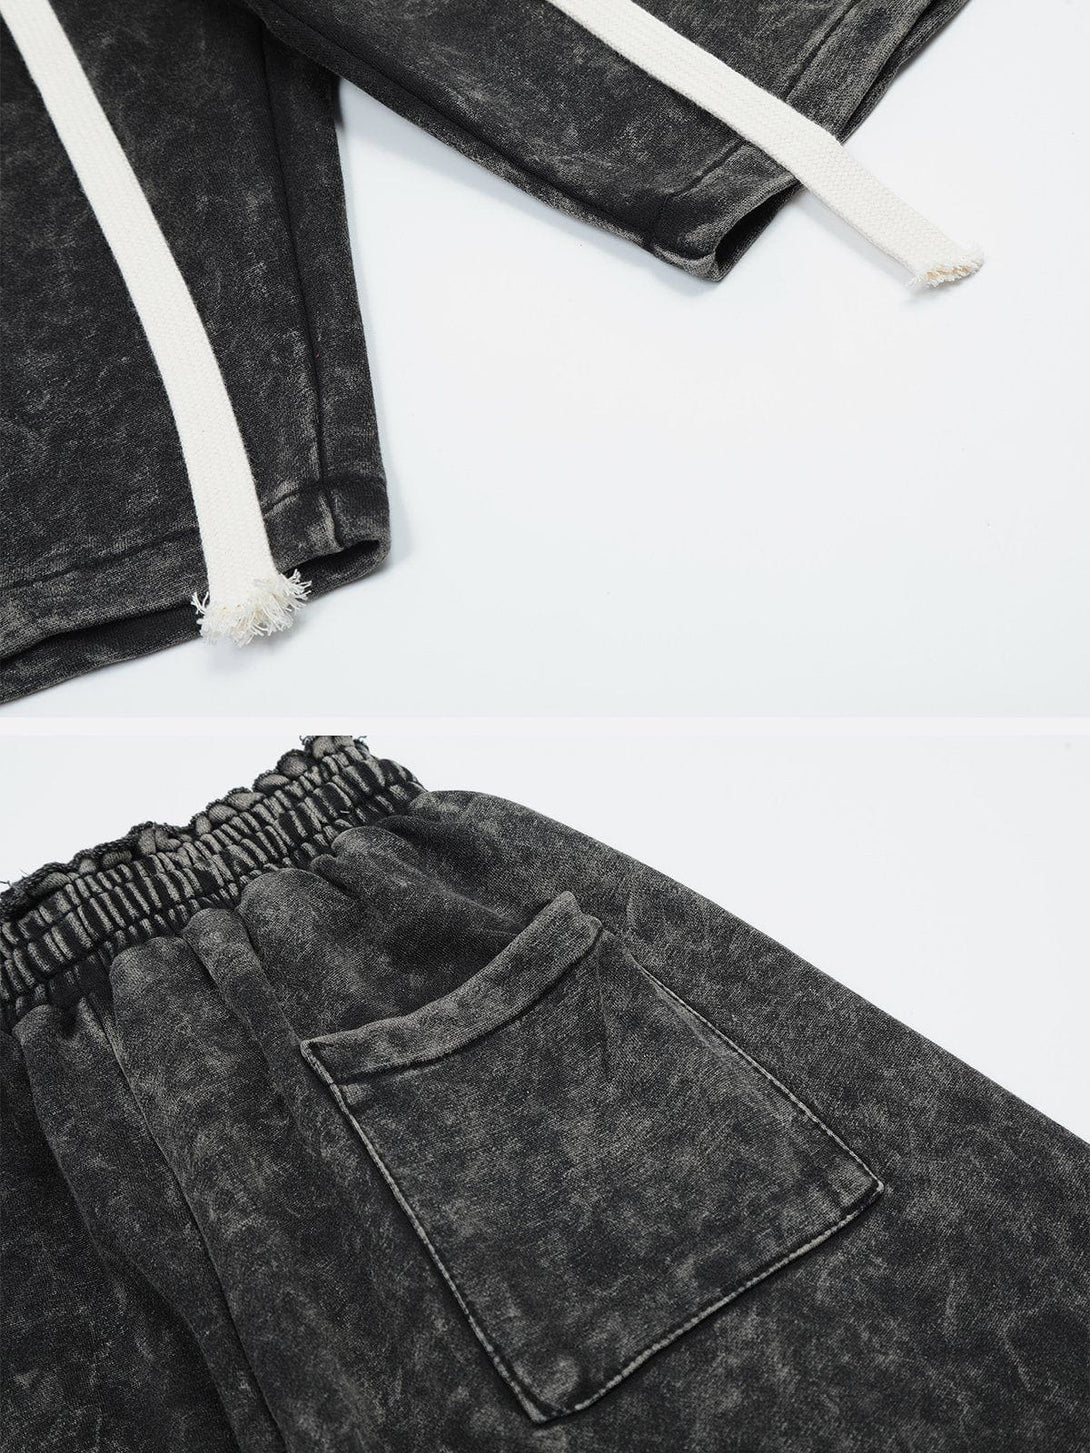 Majesda® - Washed Raw Shorts outfit ideas streetwear fashion